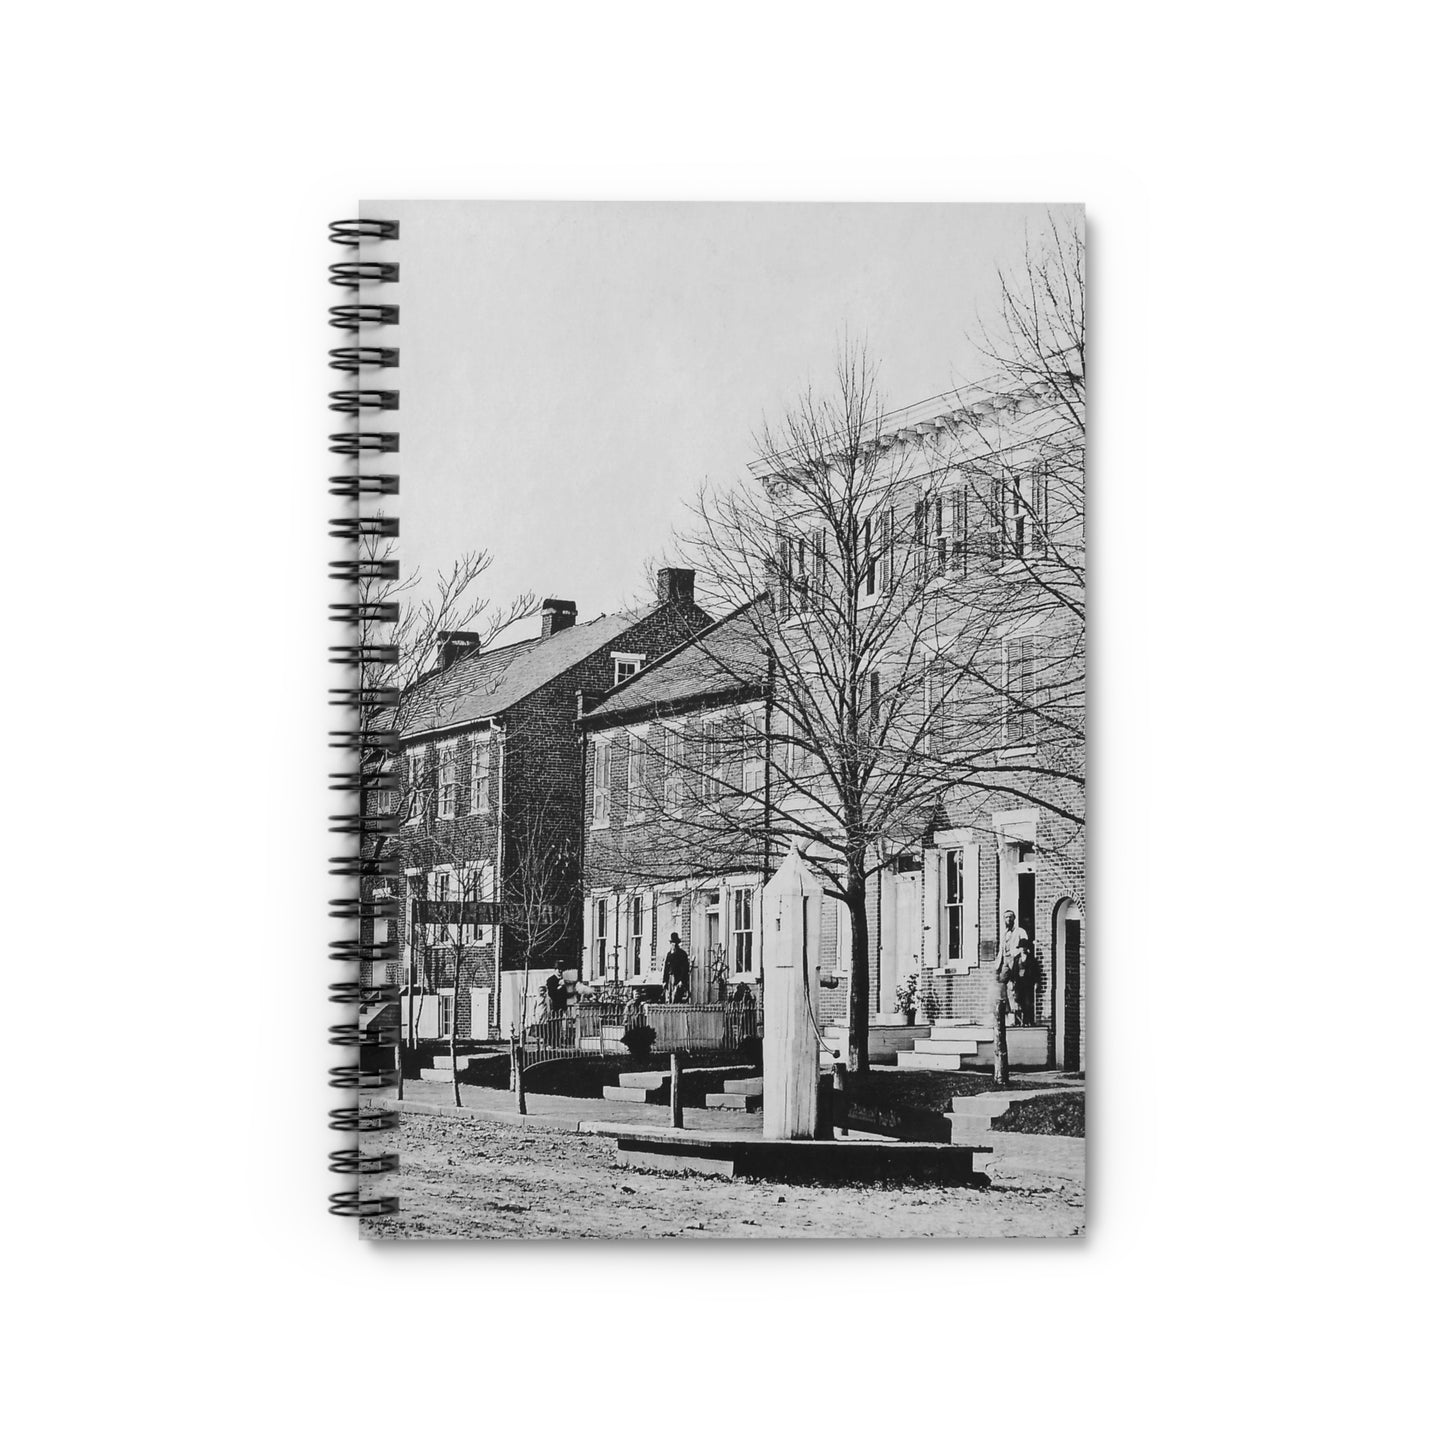 Market Square - Manheim Pennsylvania Spiral Notebook - Ruled Line